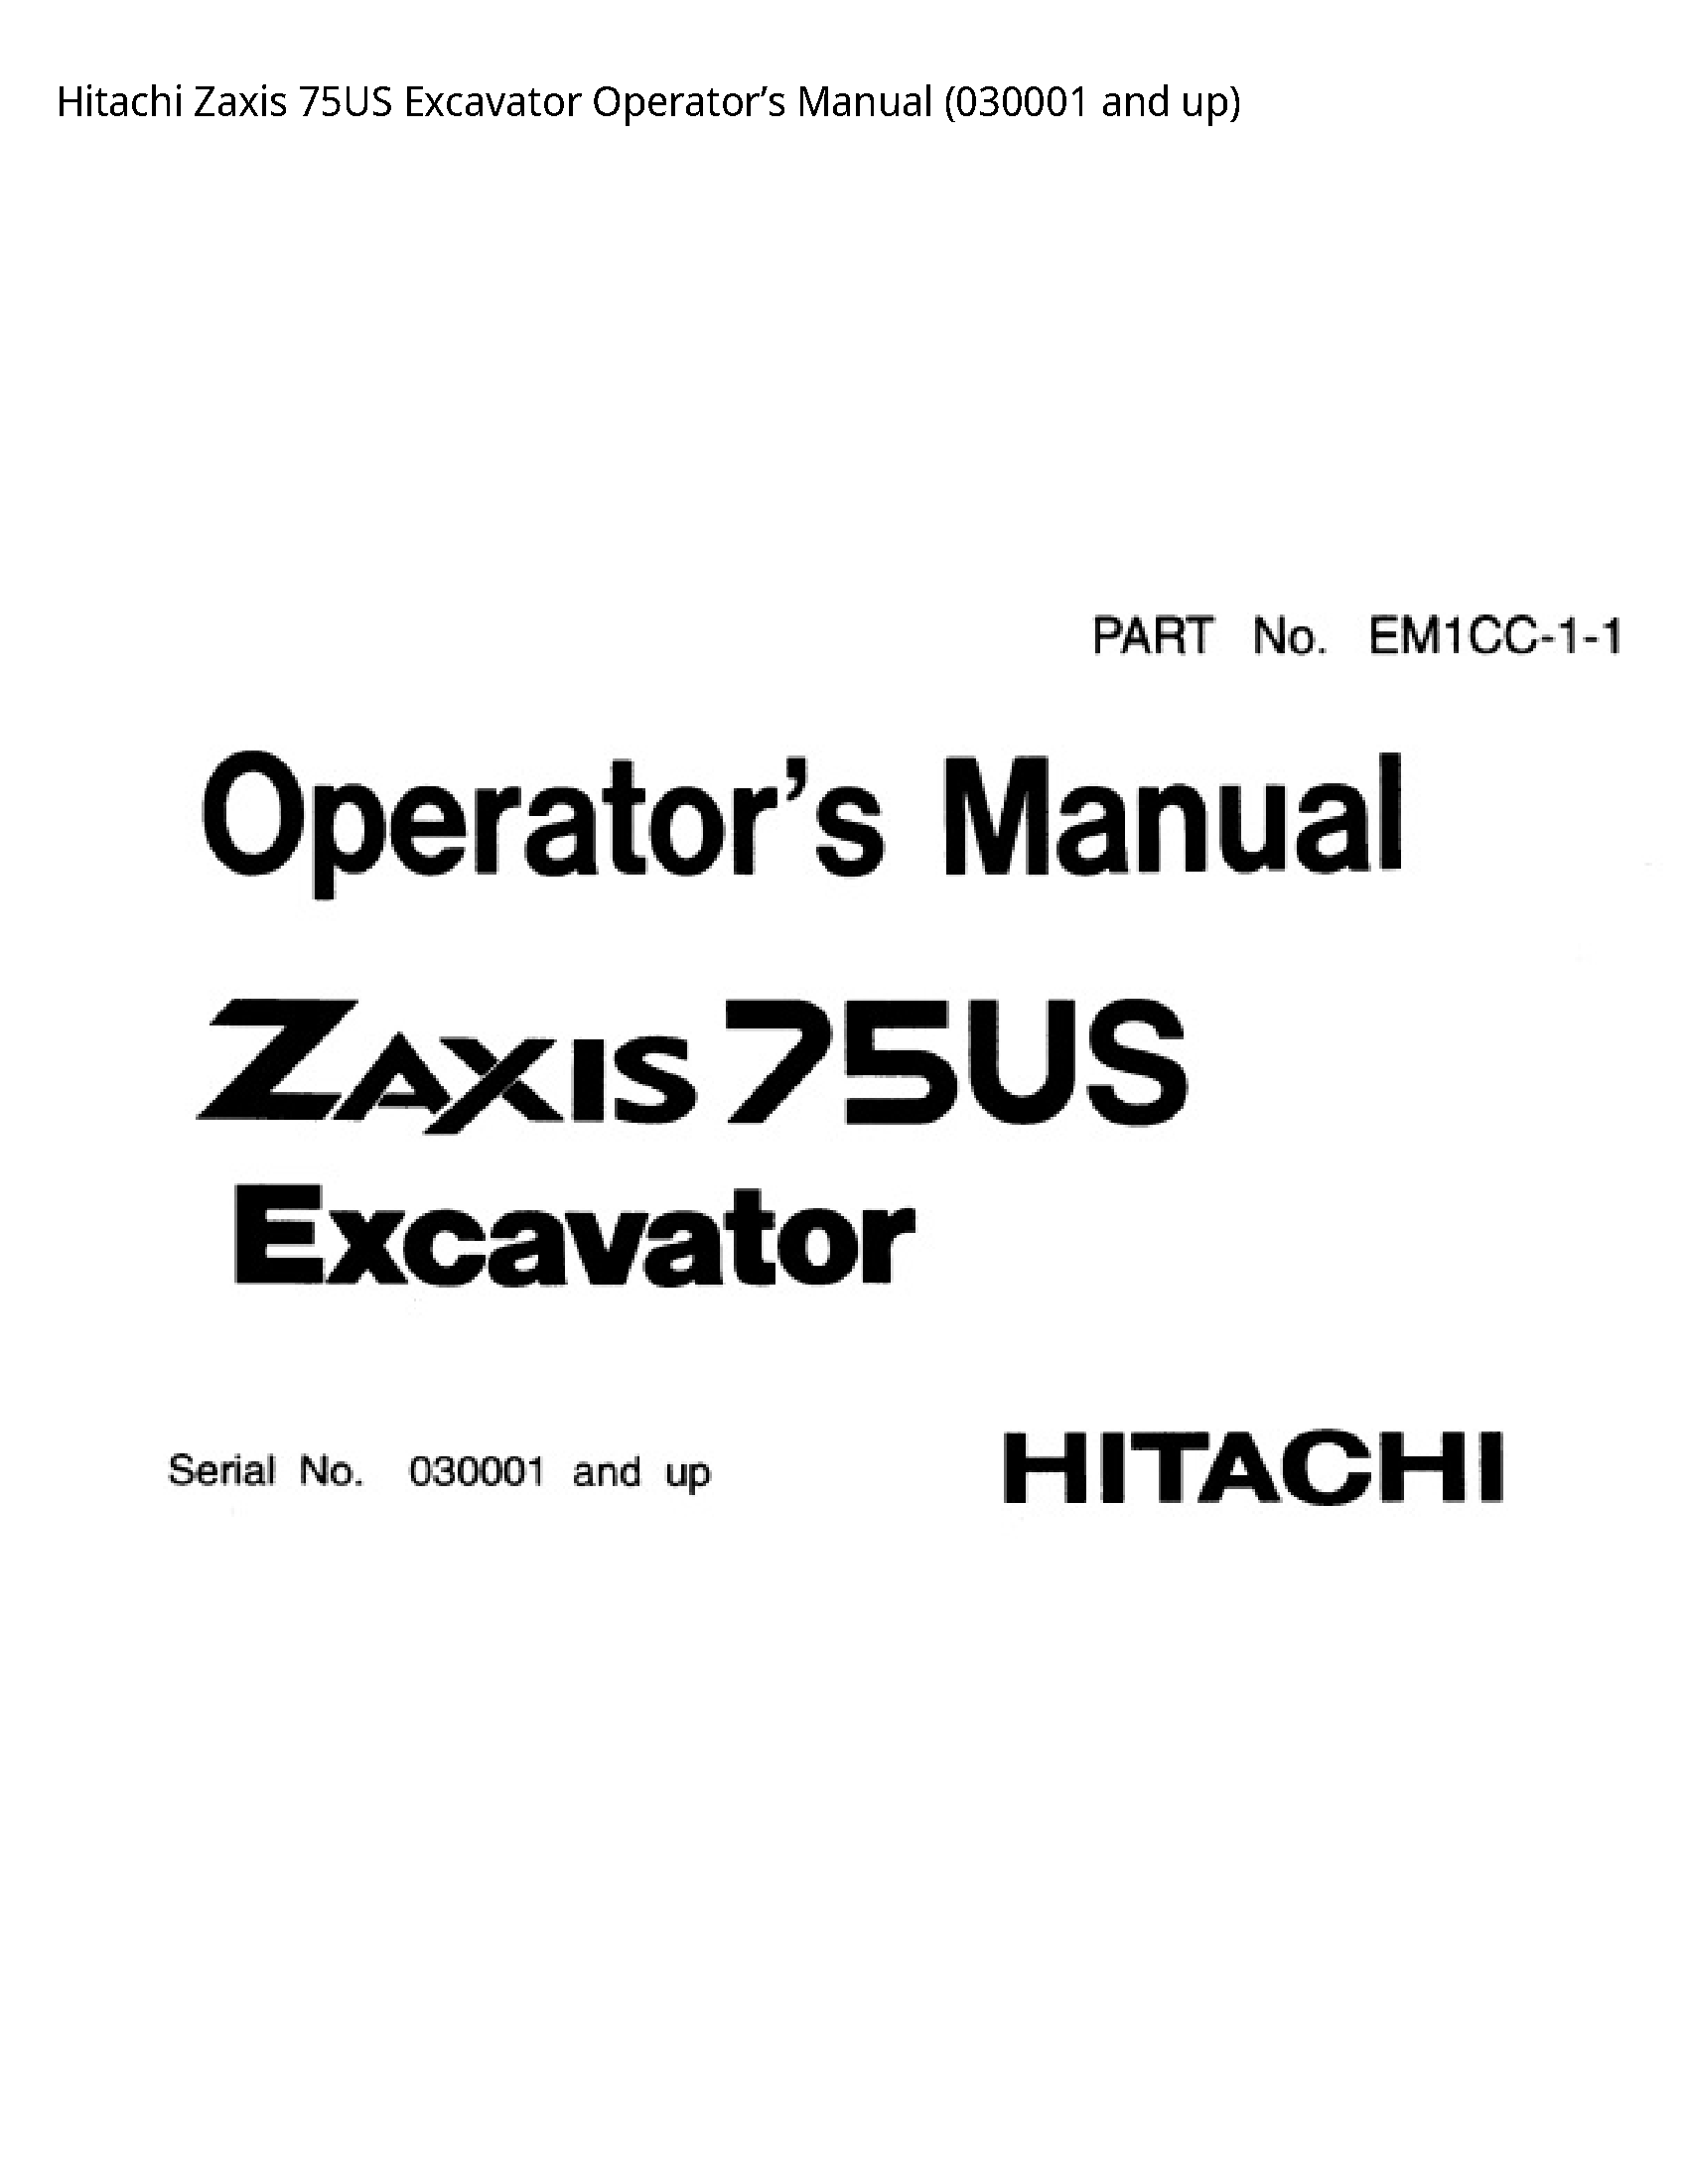 Hitachi 75US Zaxis Excavator Operator’s manual